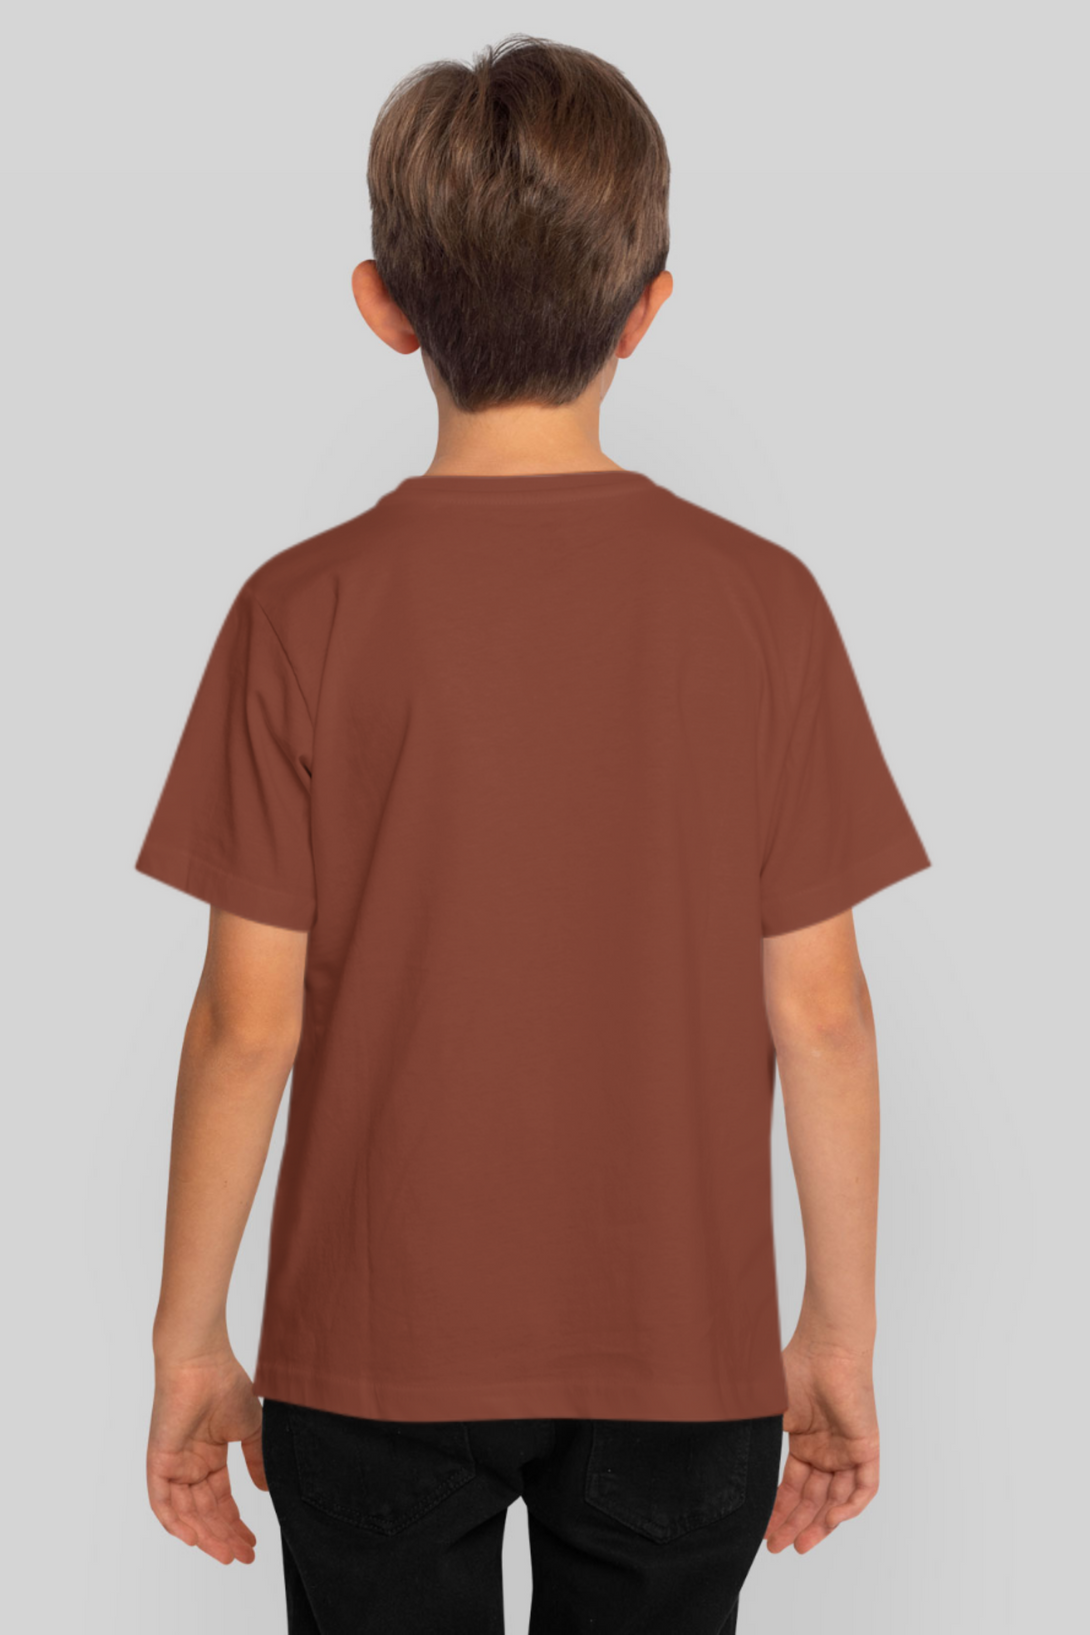 Brick Red T-Shirt For Boy - WowWaves - 2